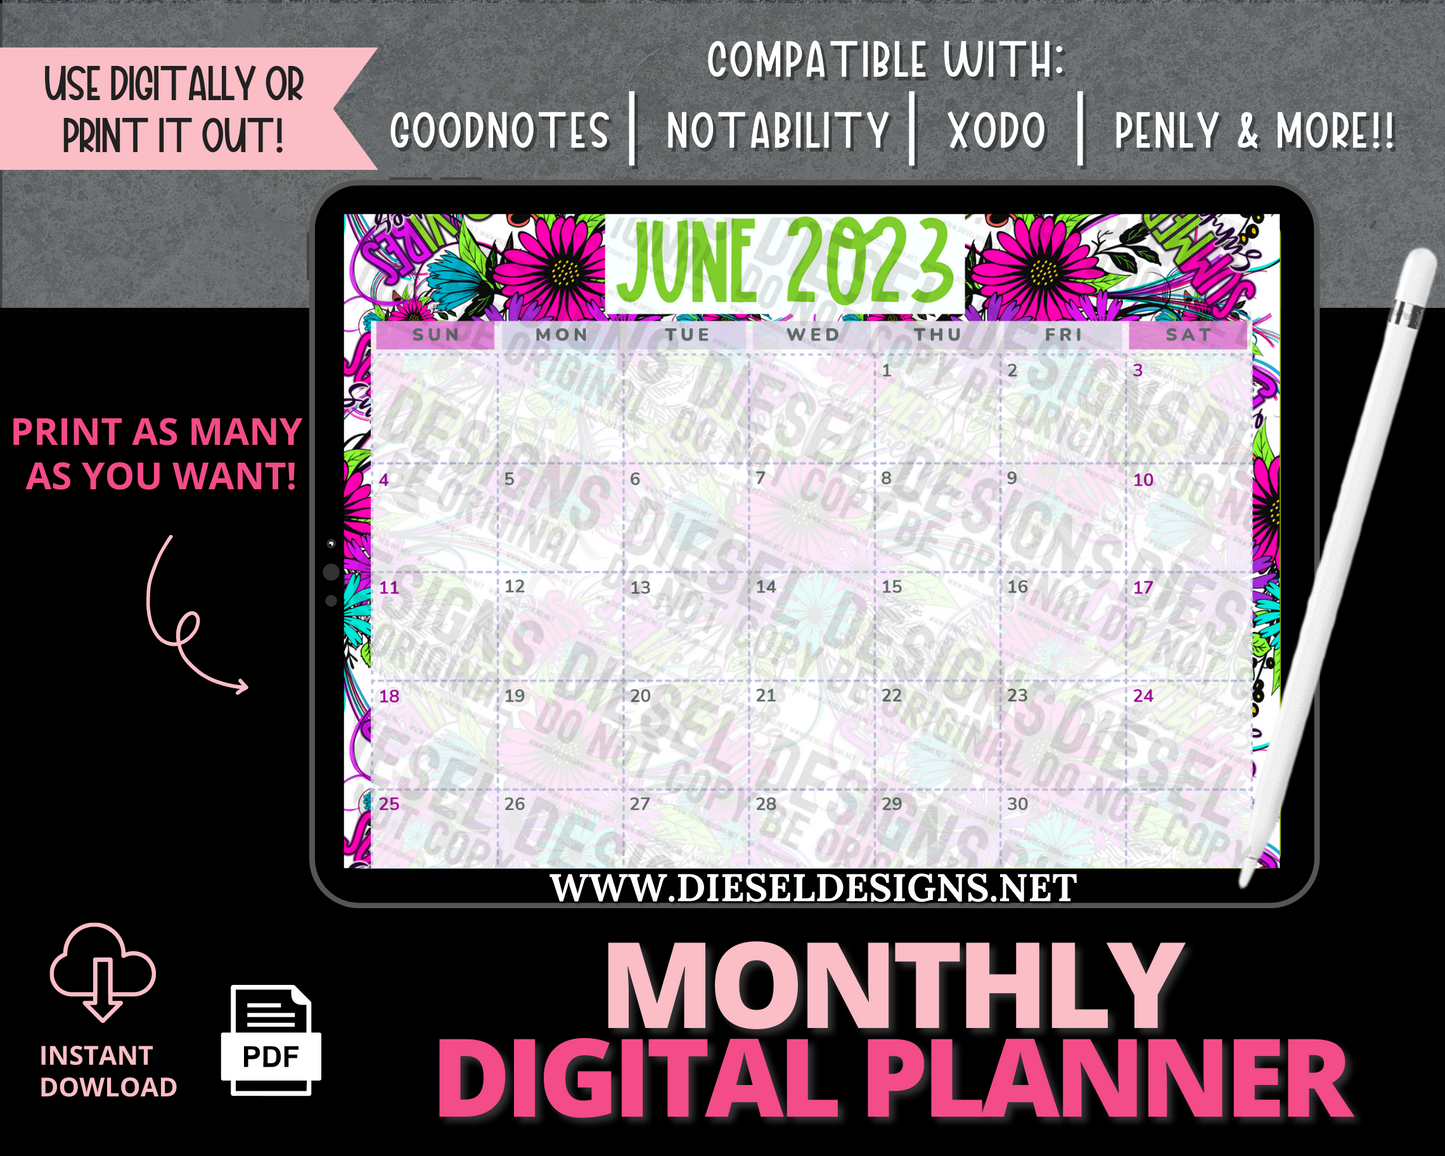 June 2023 - Summer Vibes | Monthly Digital Planner | 300 DPI